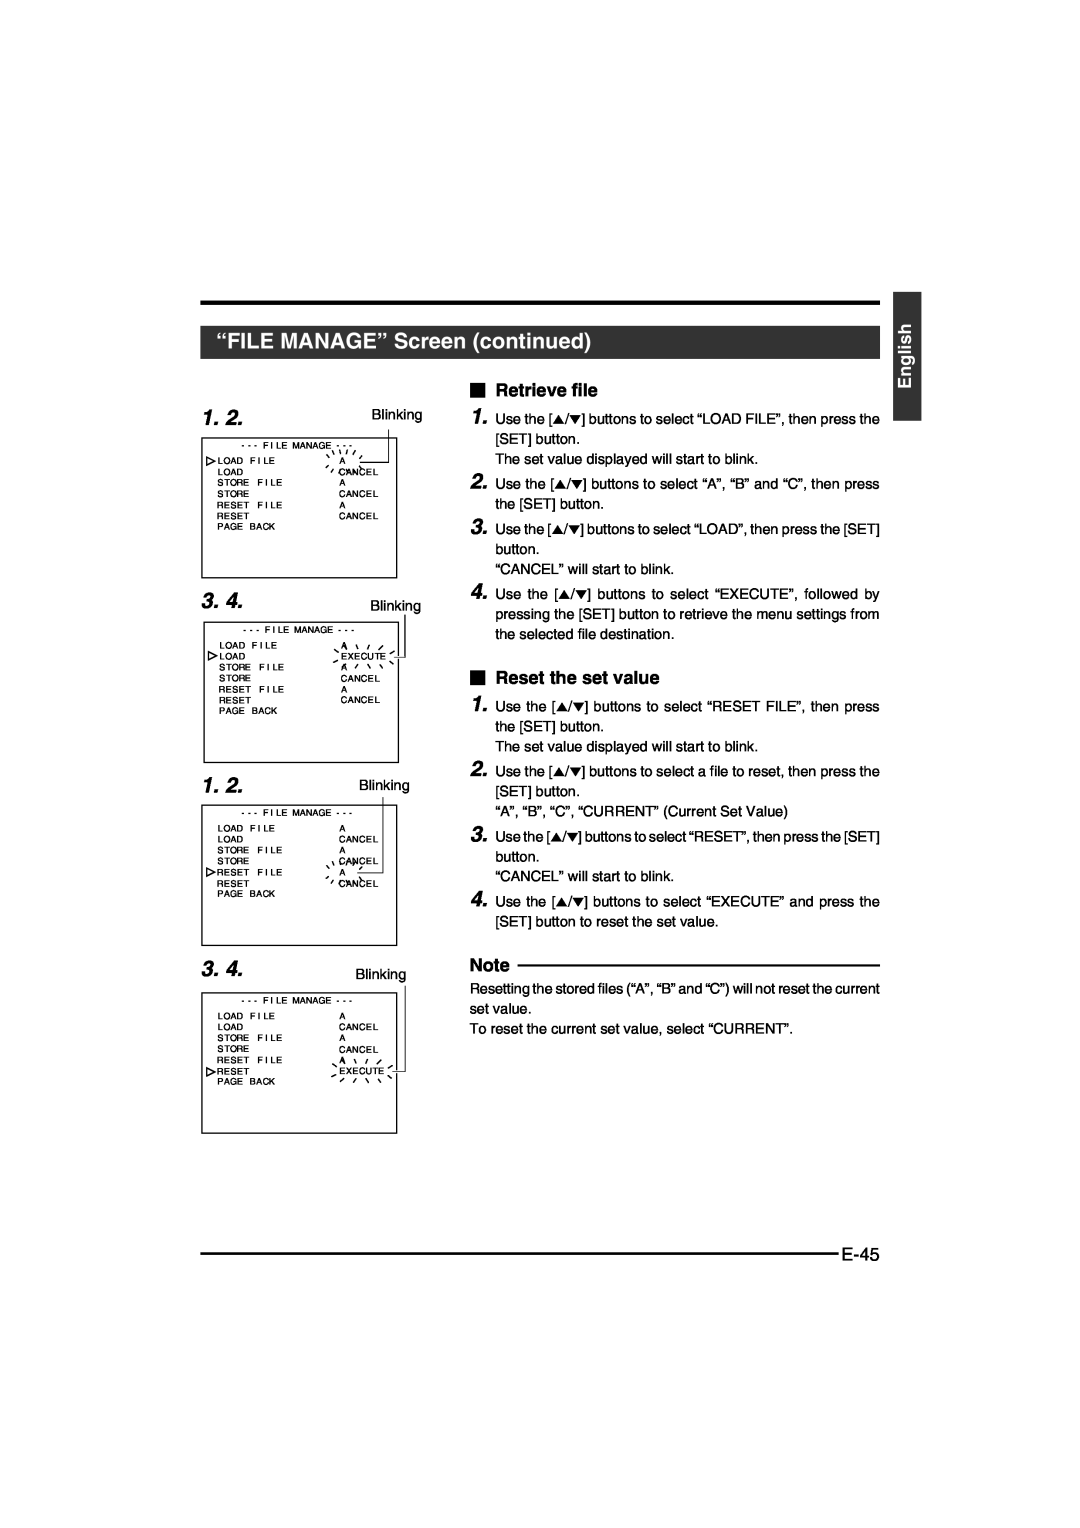 JVC KY-F550E instruction manual “FILE MANAGE” Screen continued,  Retrieve file,  Reset the set value, E-45, English 